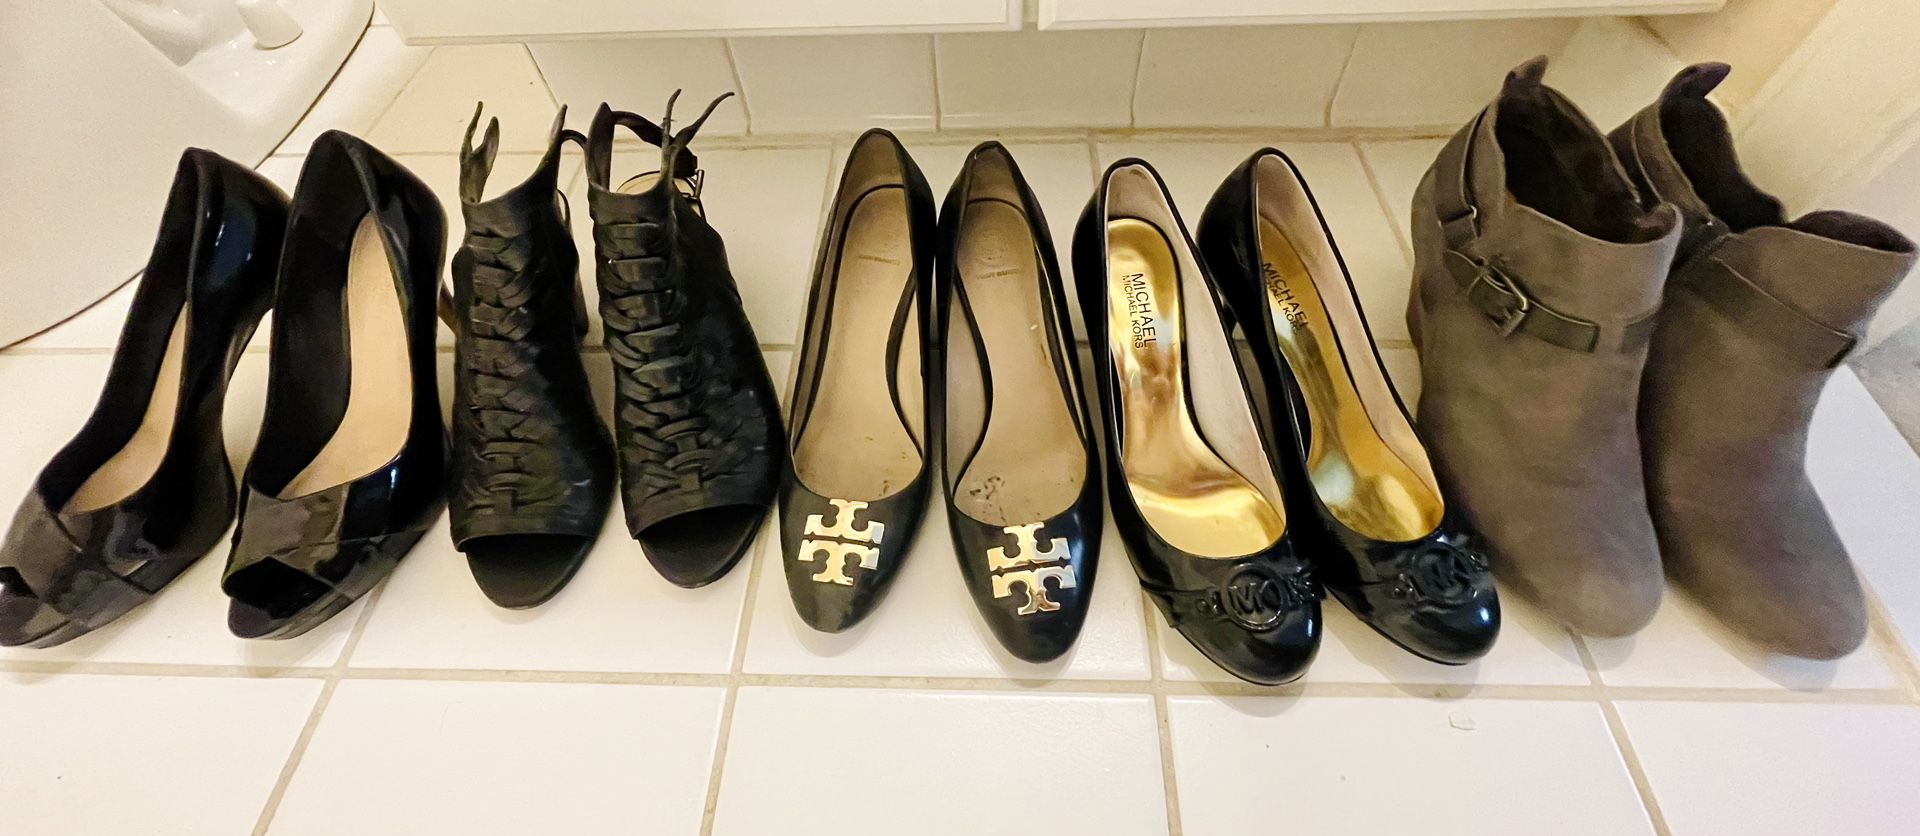 Women’s Heel shoes - Size 9